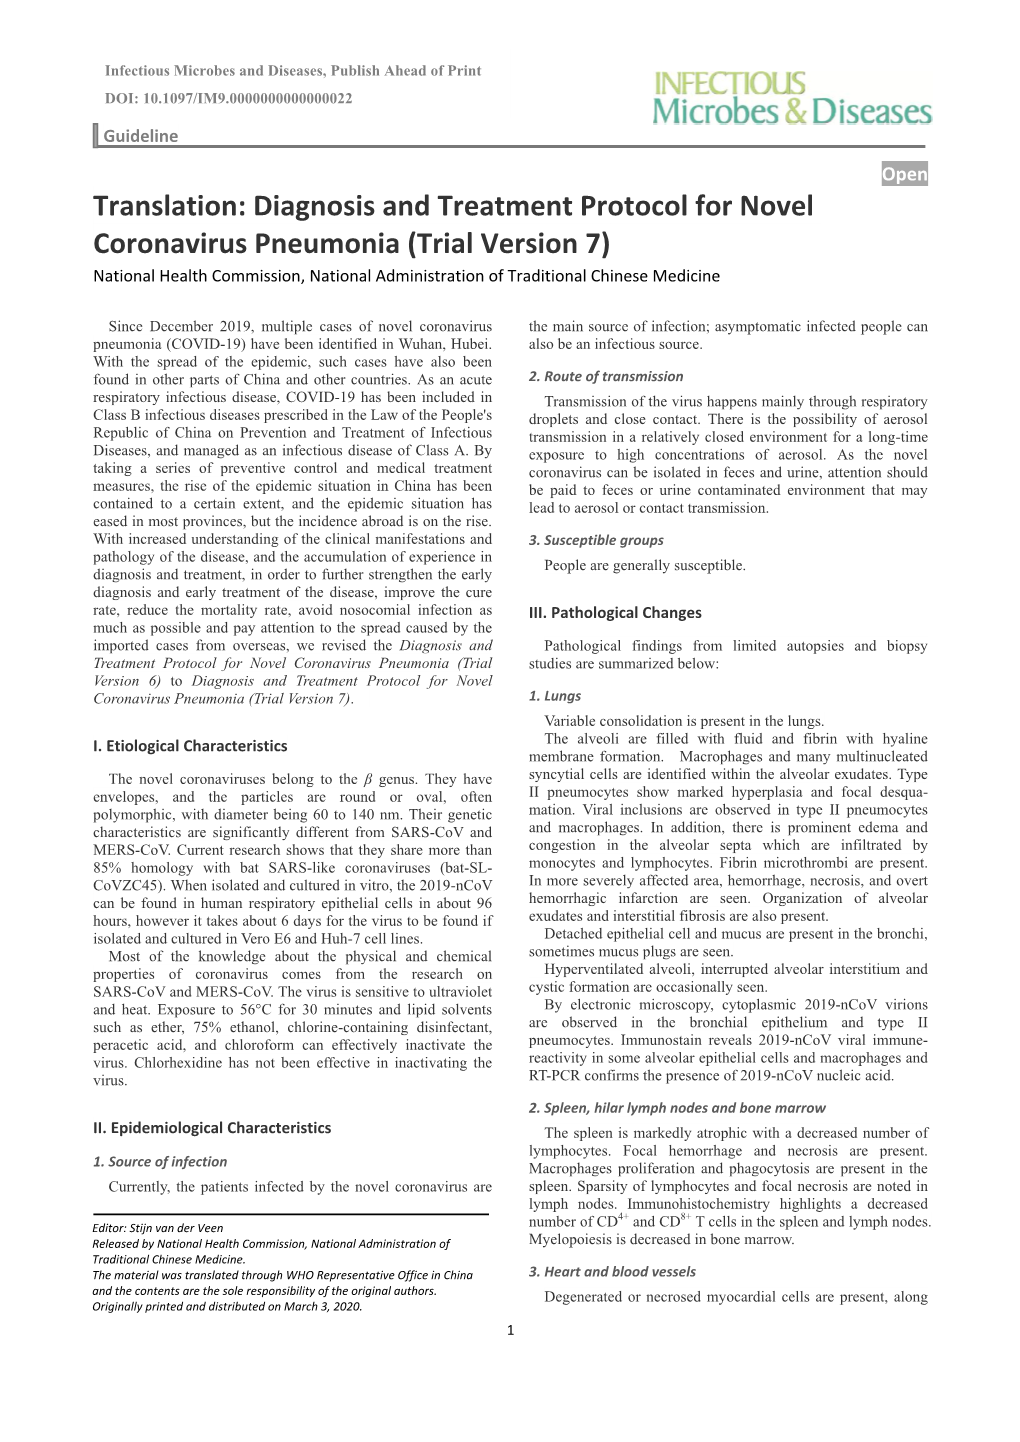 Diagnosis and Treatment Protocol for Novel Coronavirus Pneumonia